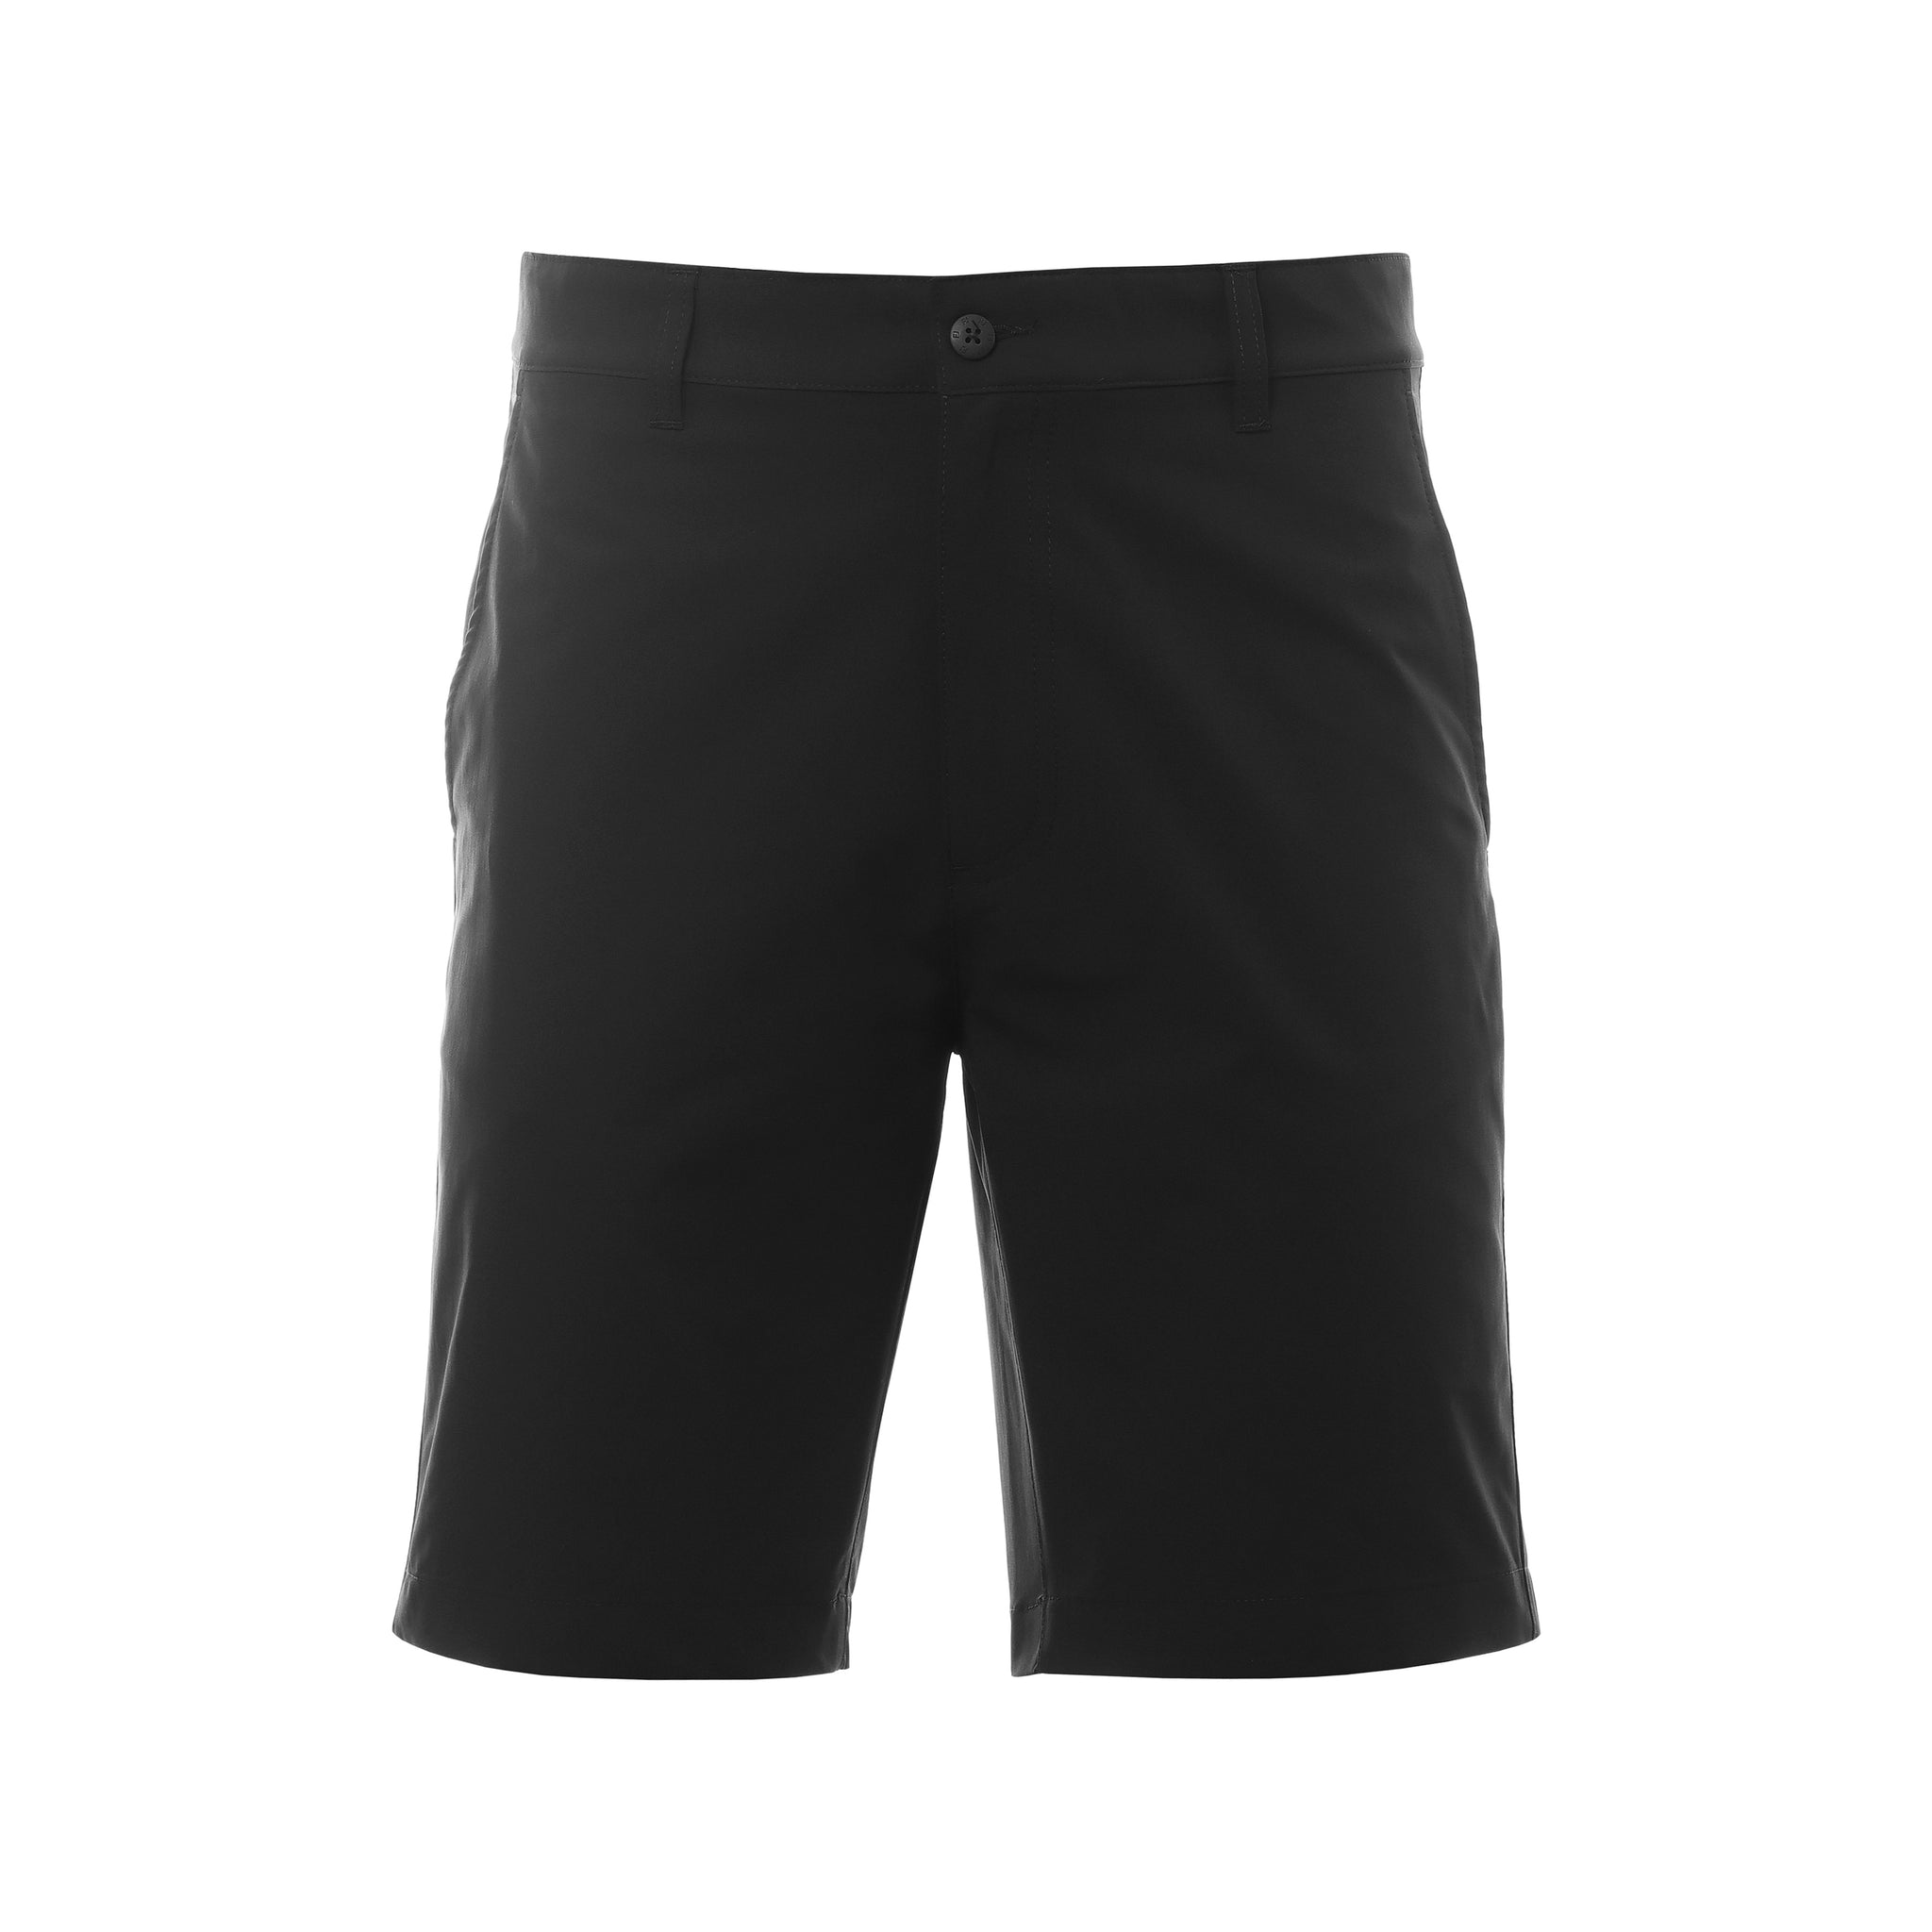 footjoy-fj-par-shorts-80165-black